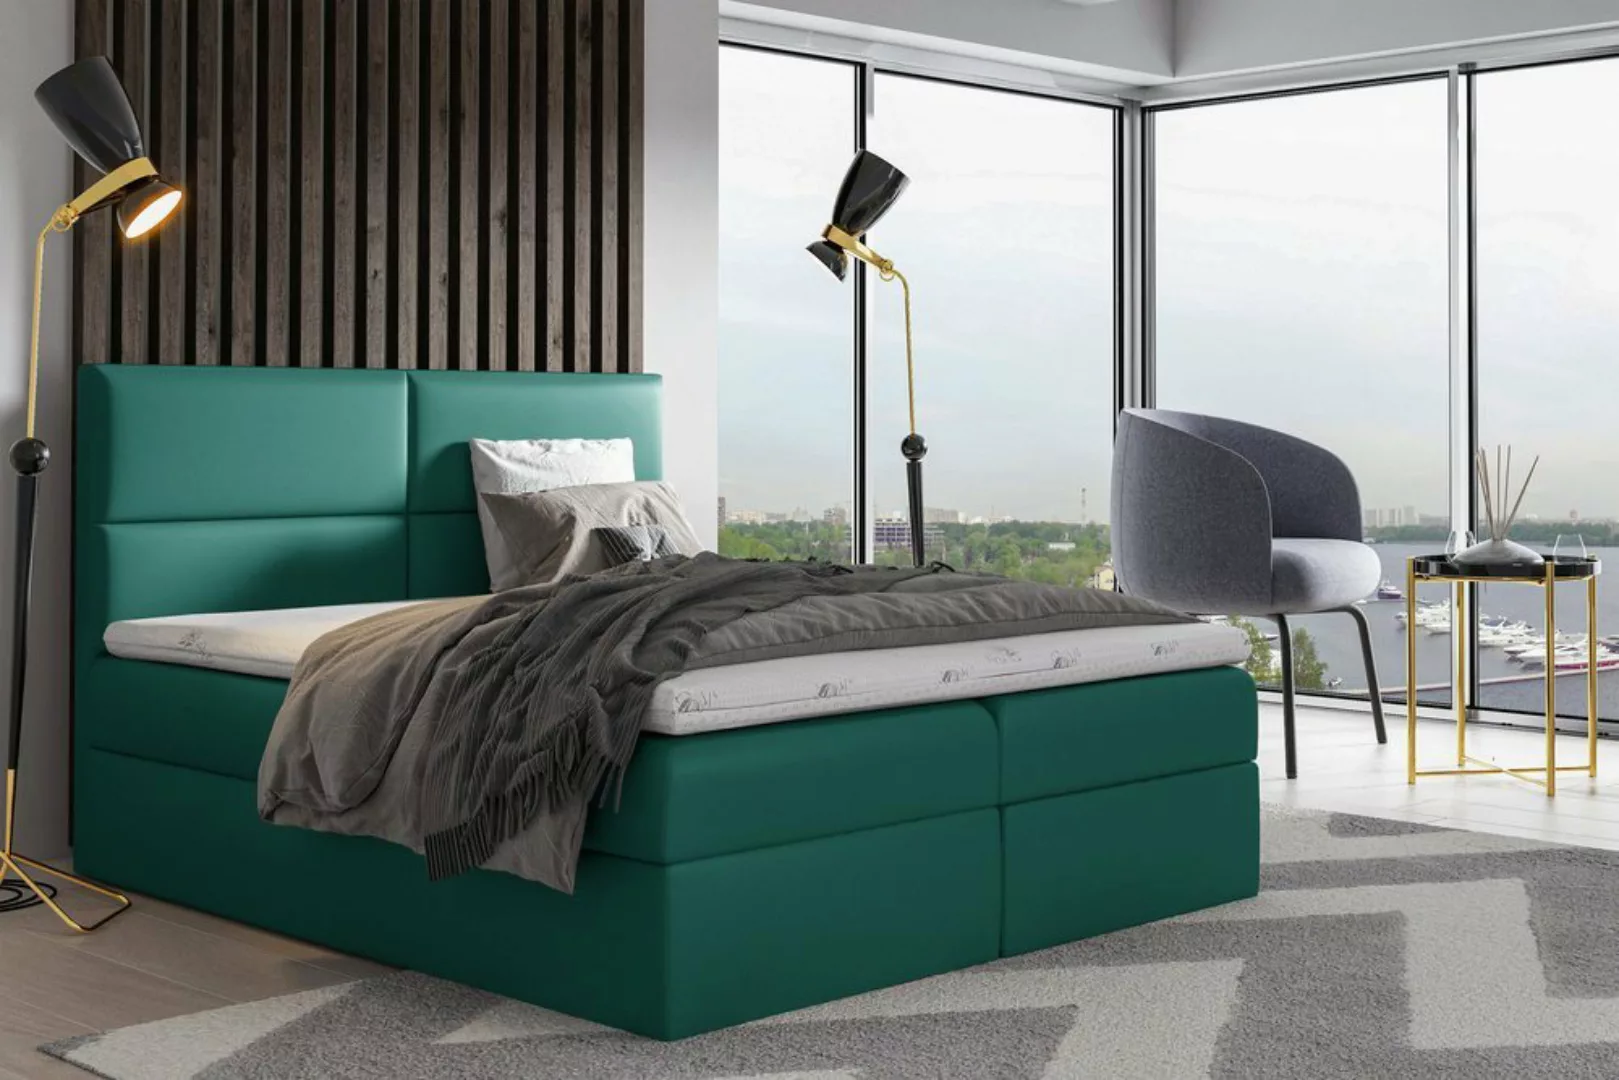 99rooms Boxspringbett Merino (Schlafzimmerbett, Bett), Design günstig online kaufen